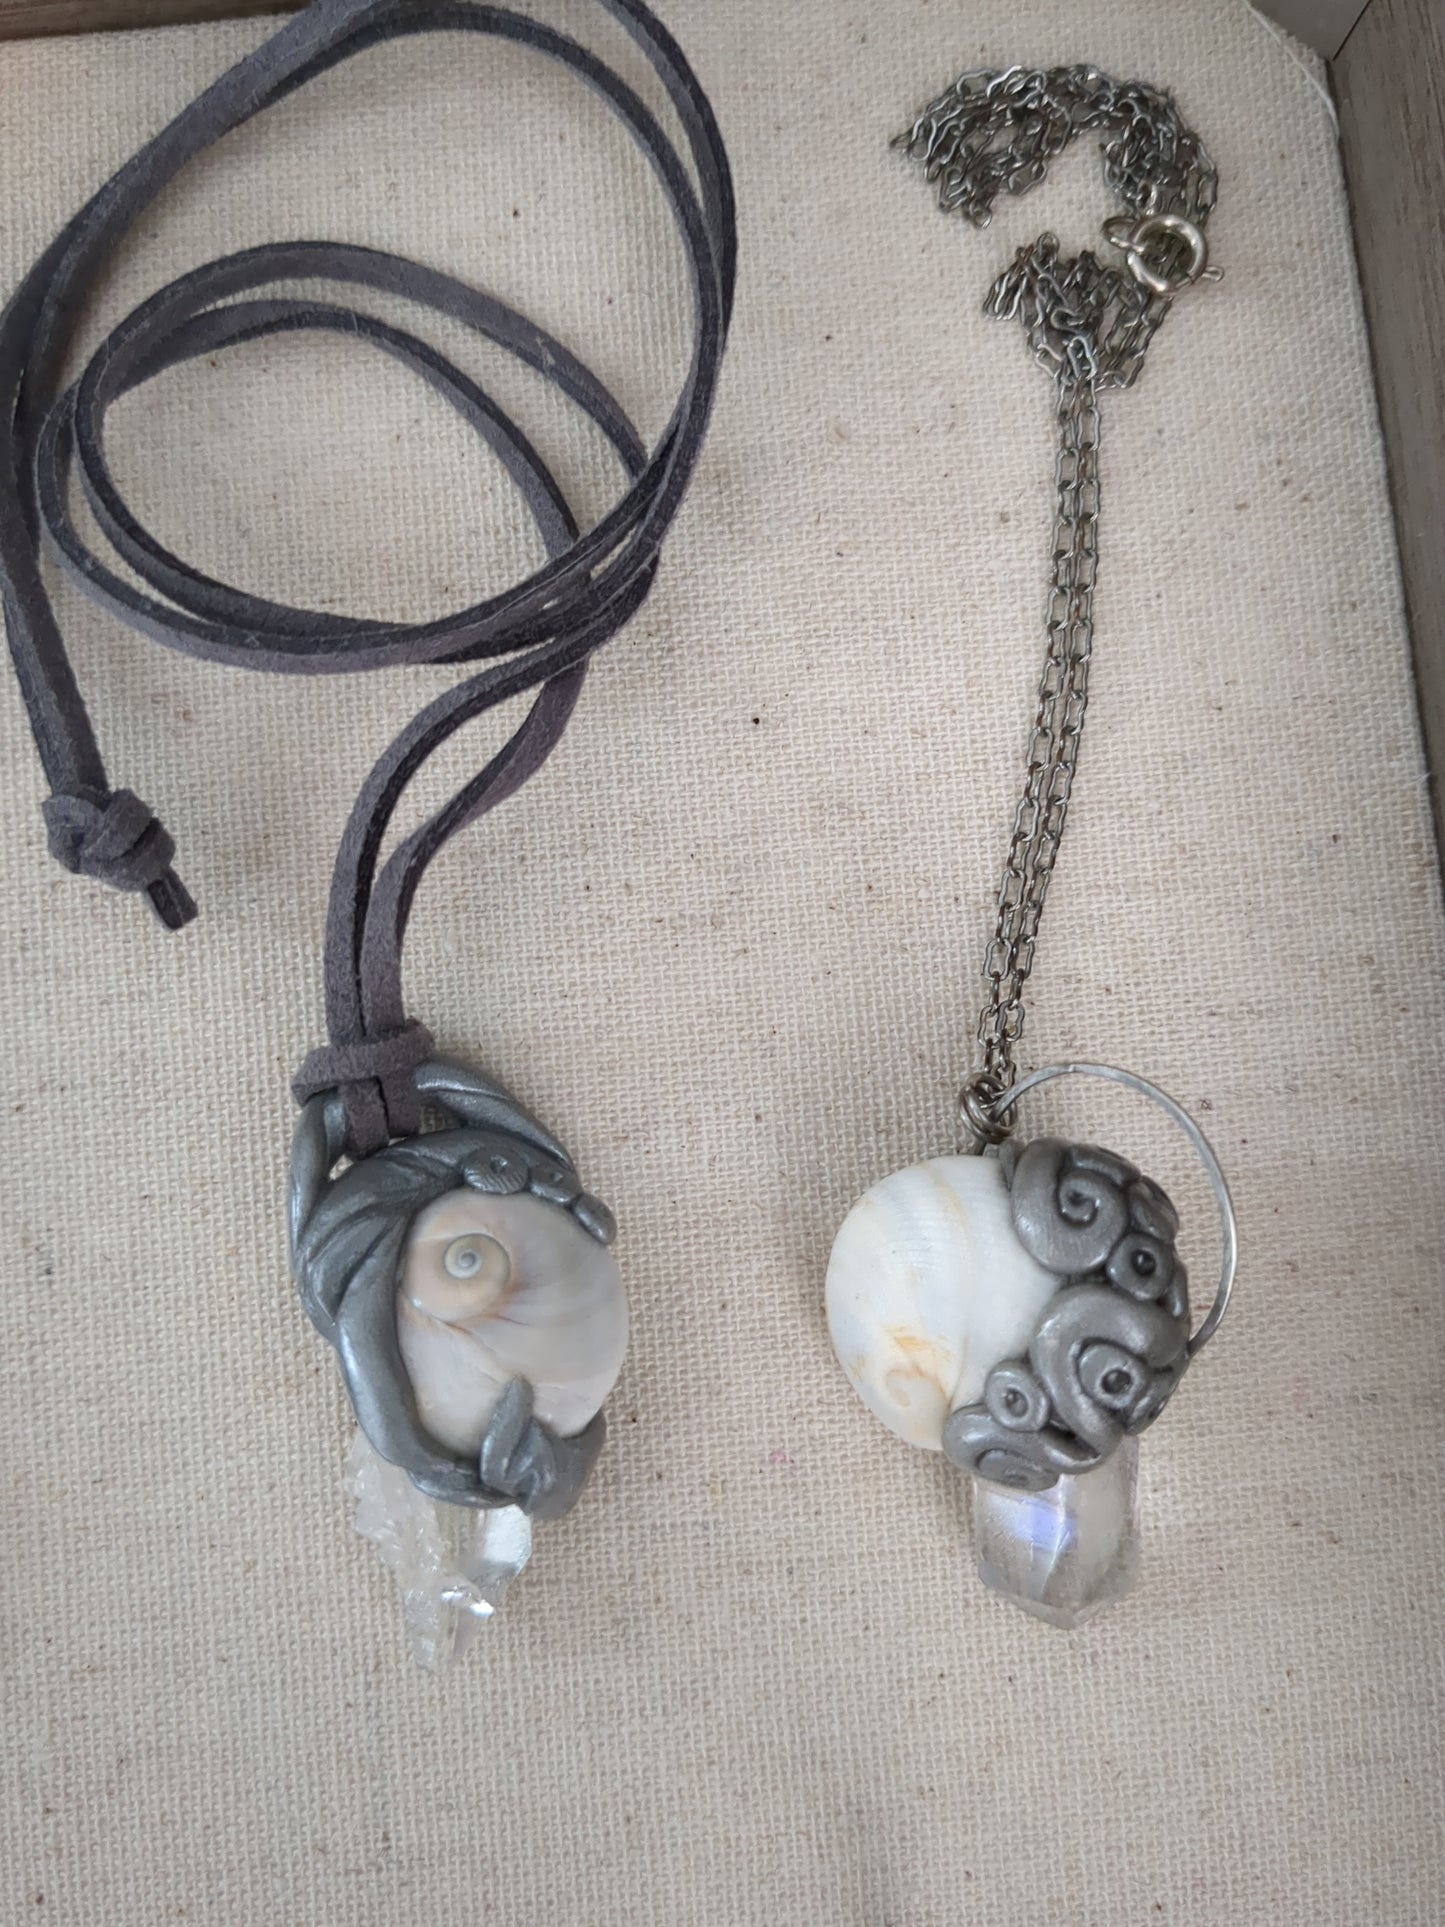 Snail shell and clear quartz sculptural pendant